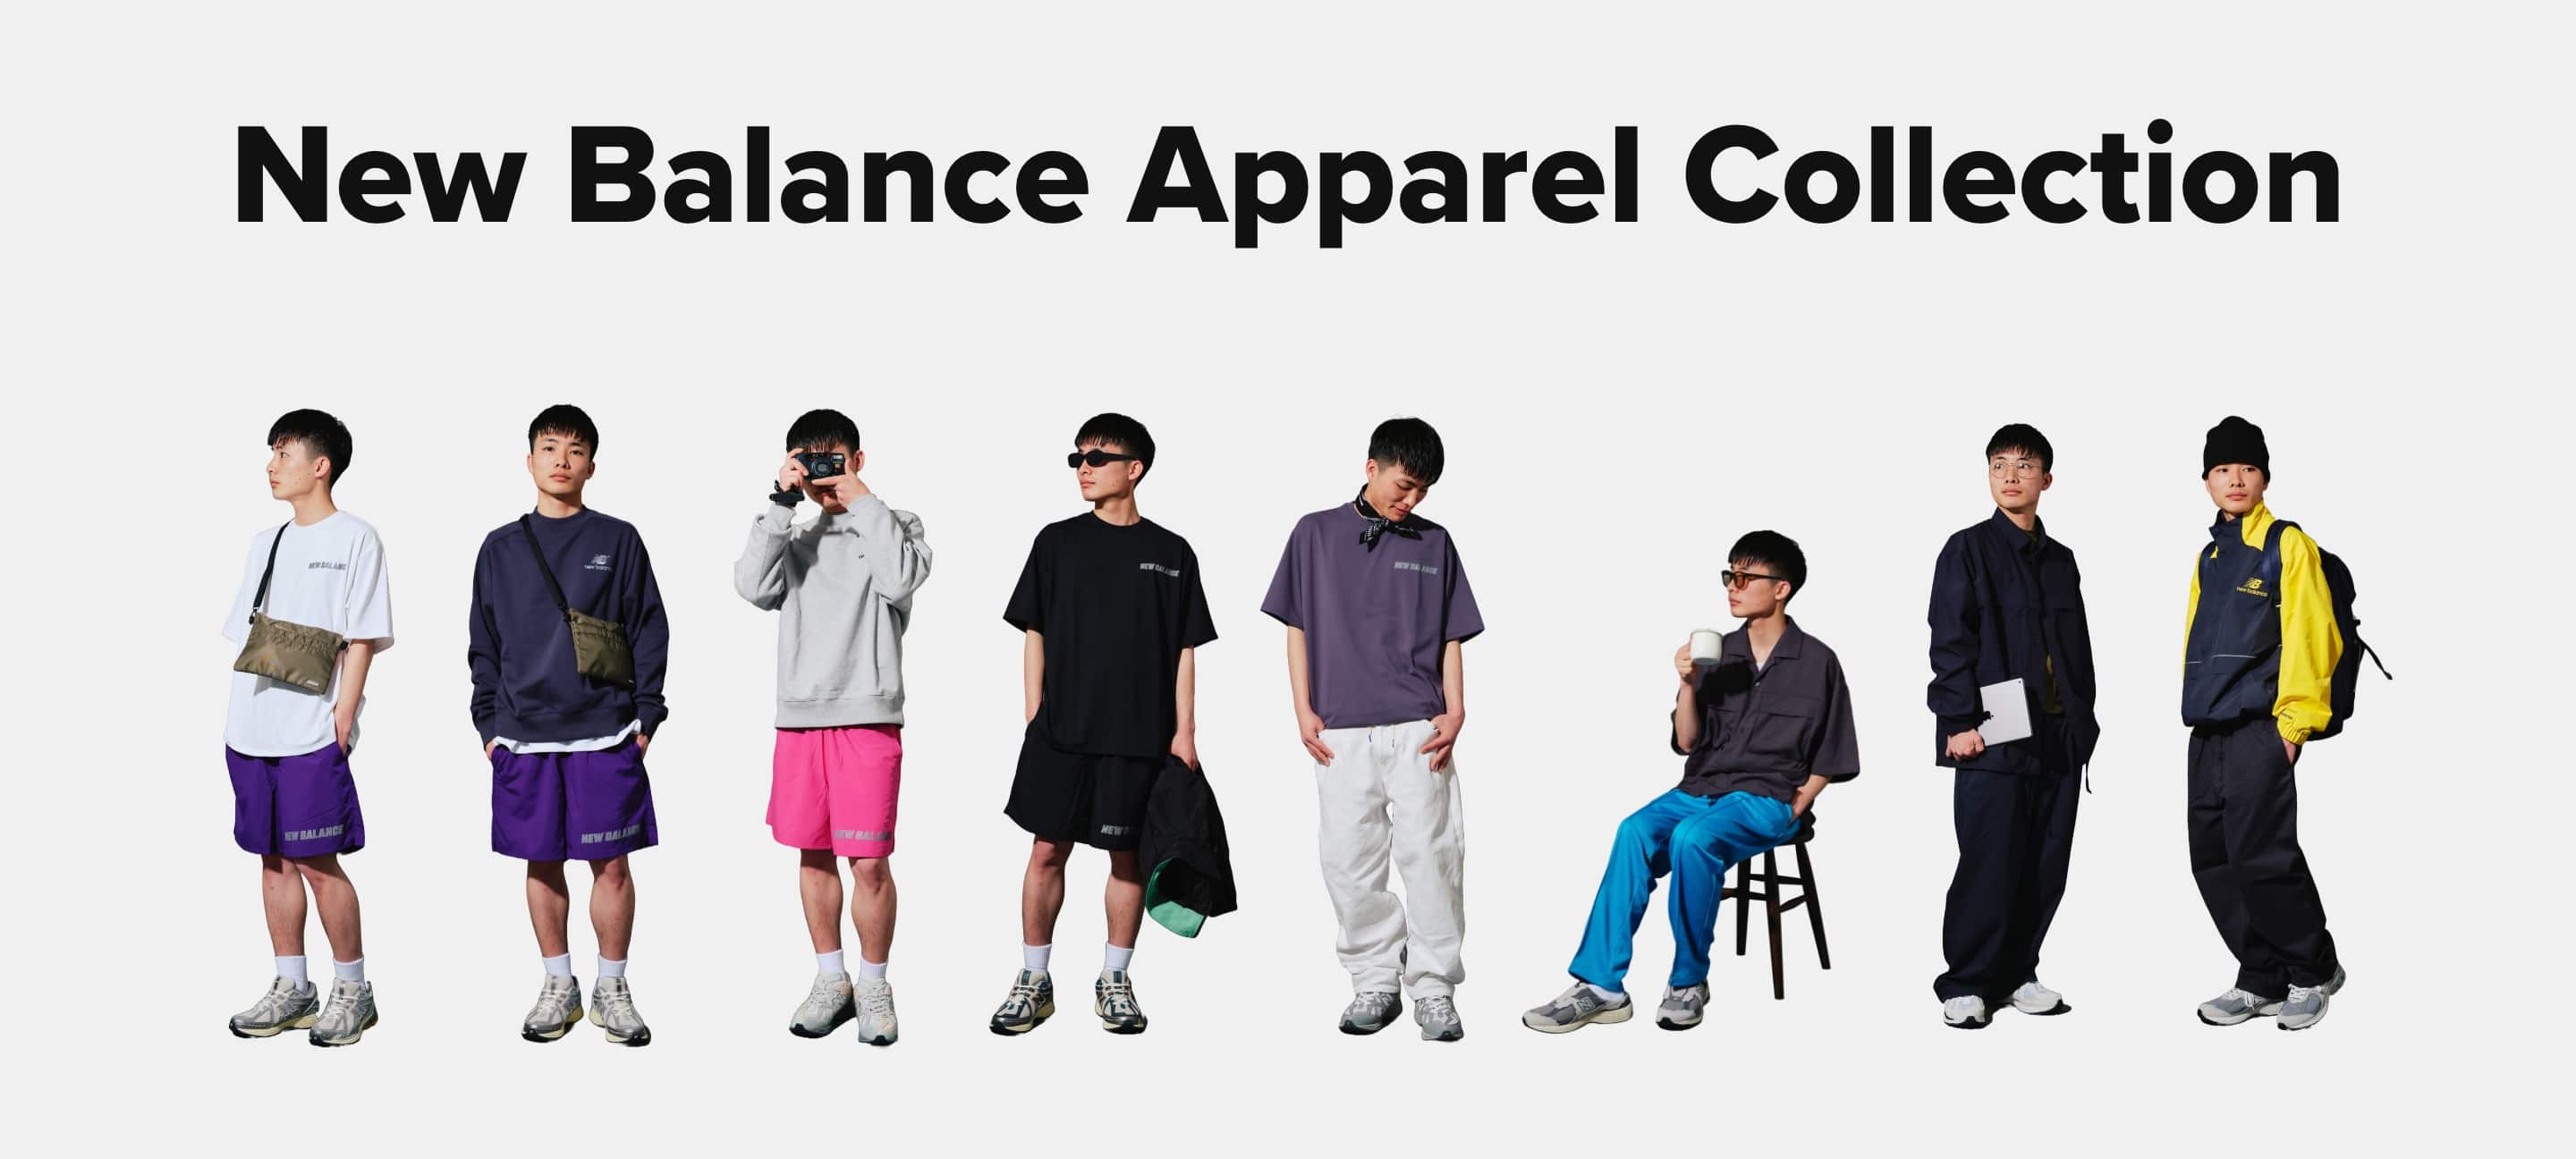 New balance Apparel Collection